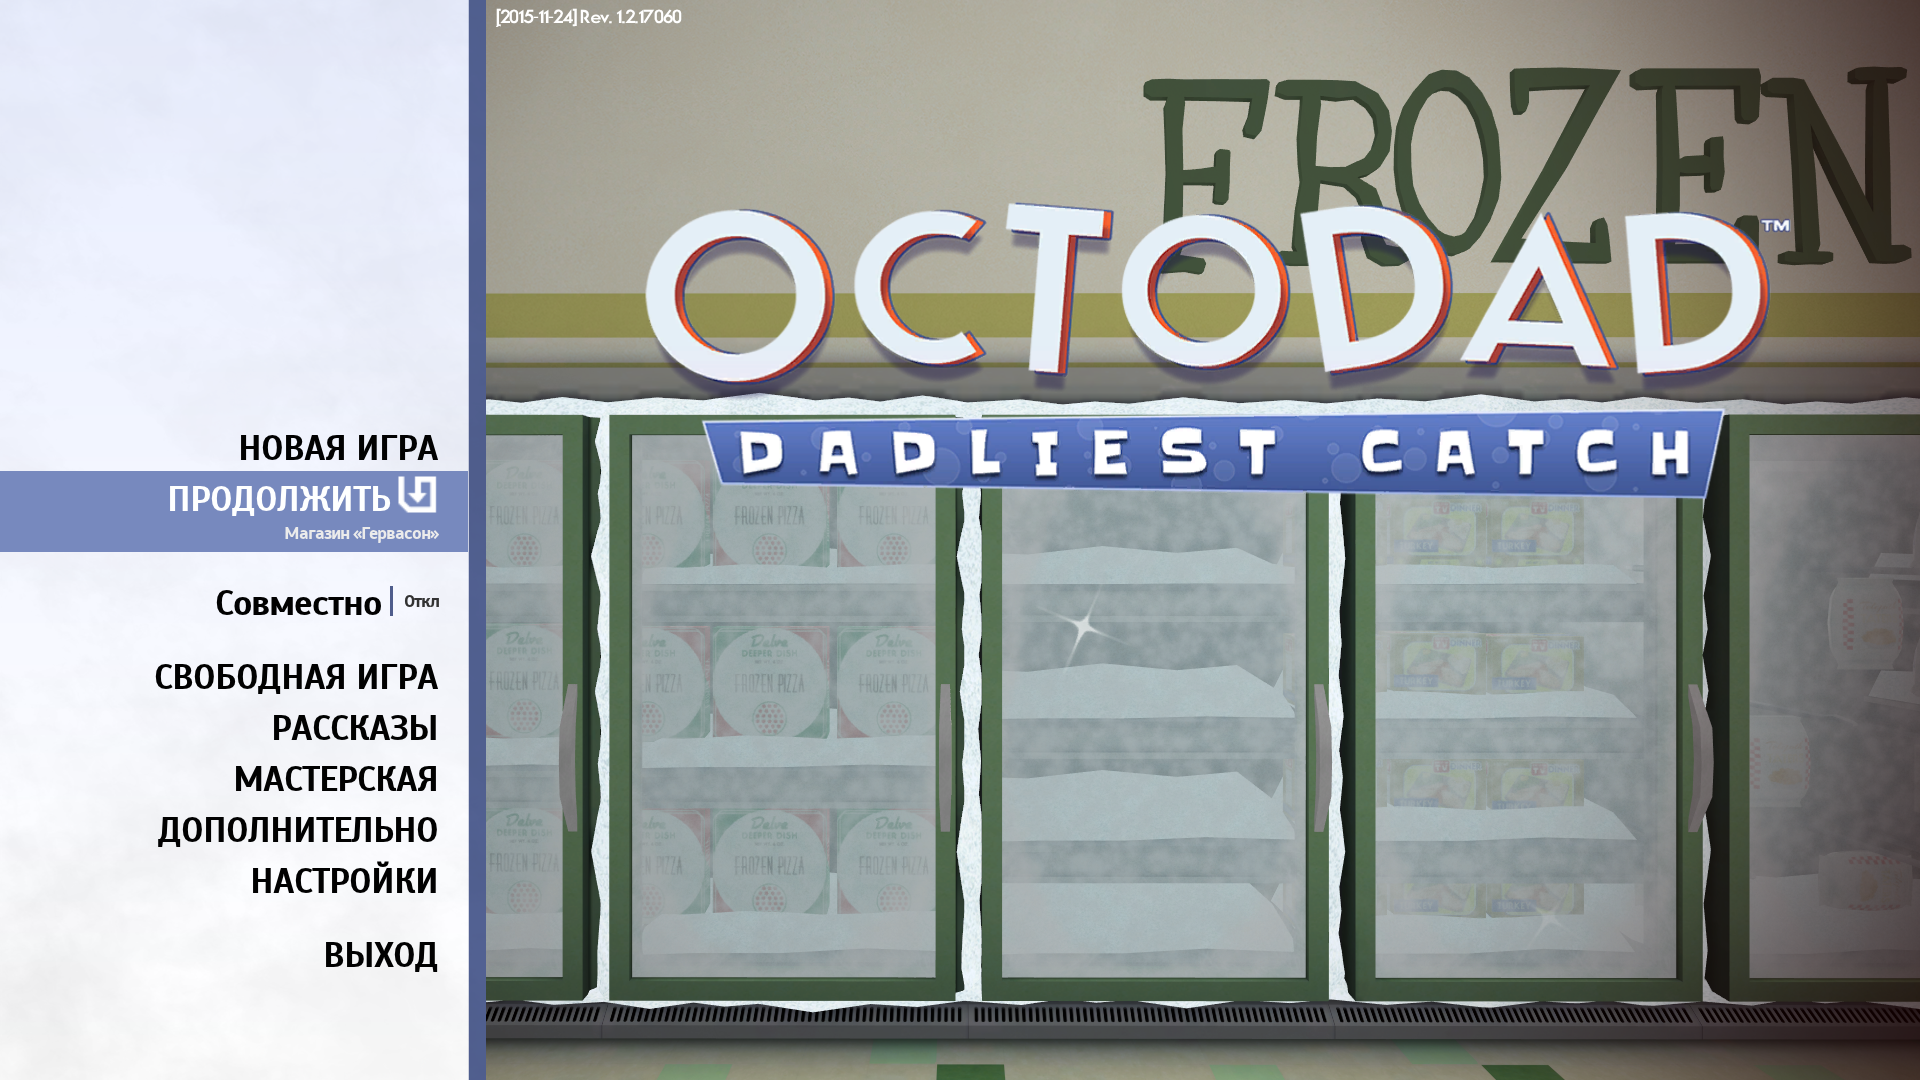 Octodad Dadliest Catch Screenshots For Windows Mobygames